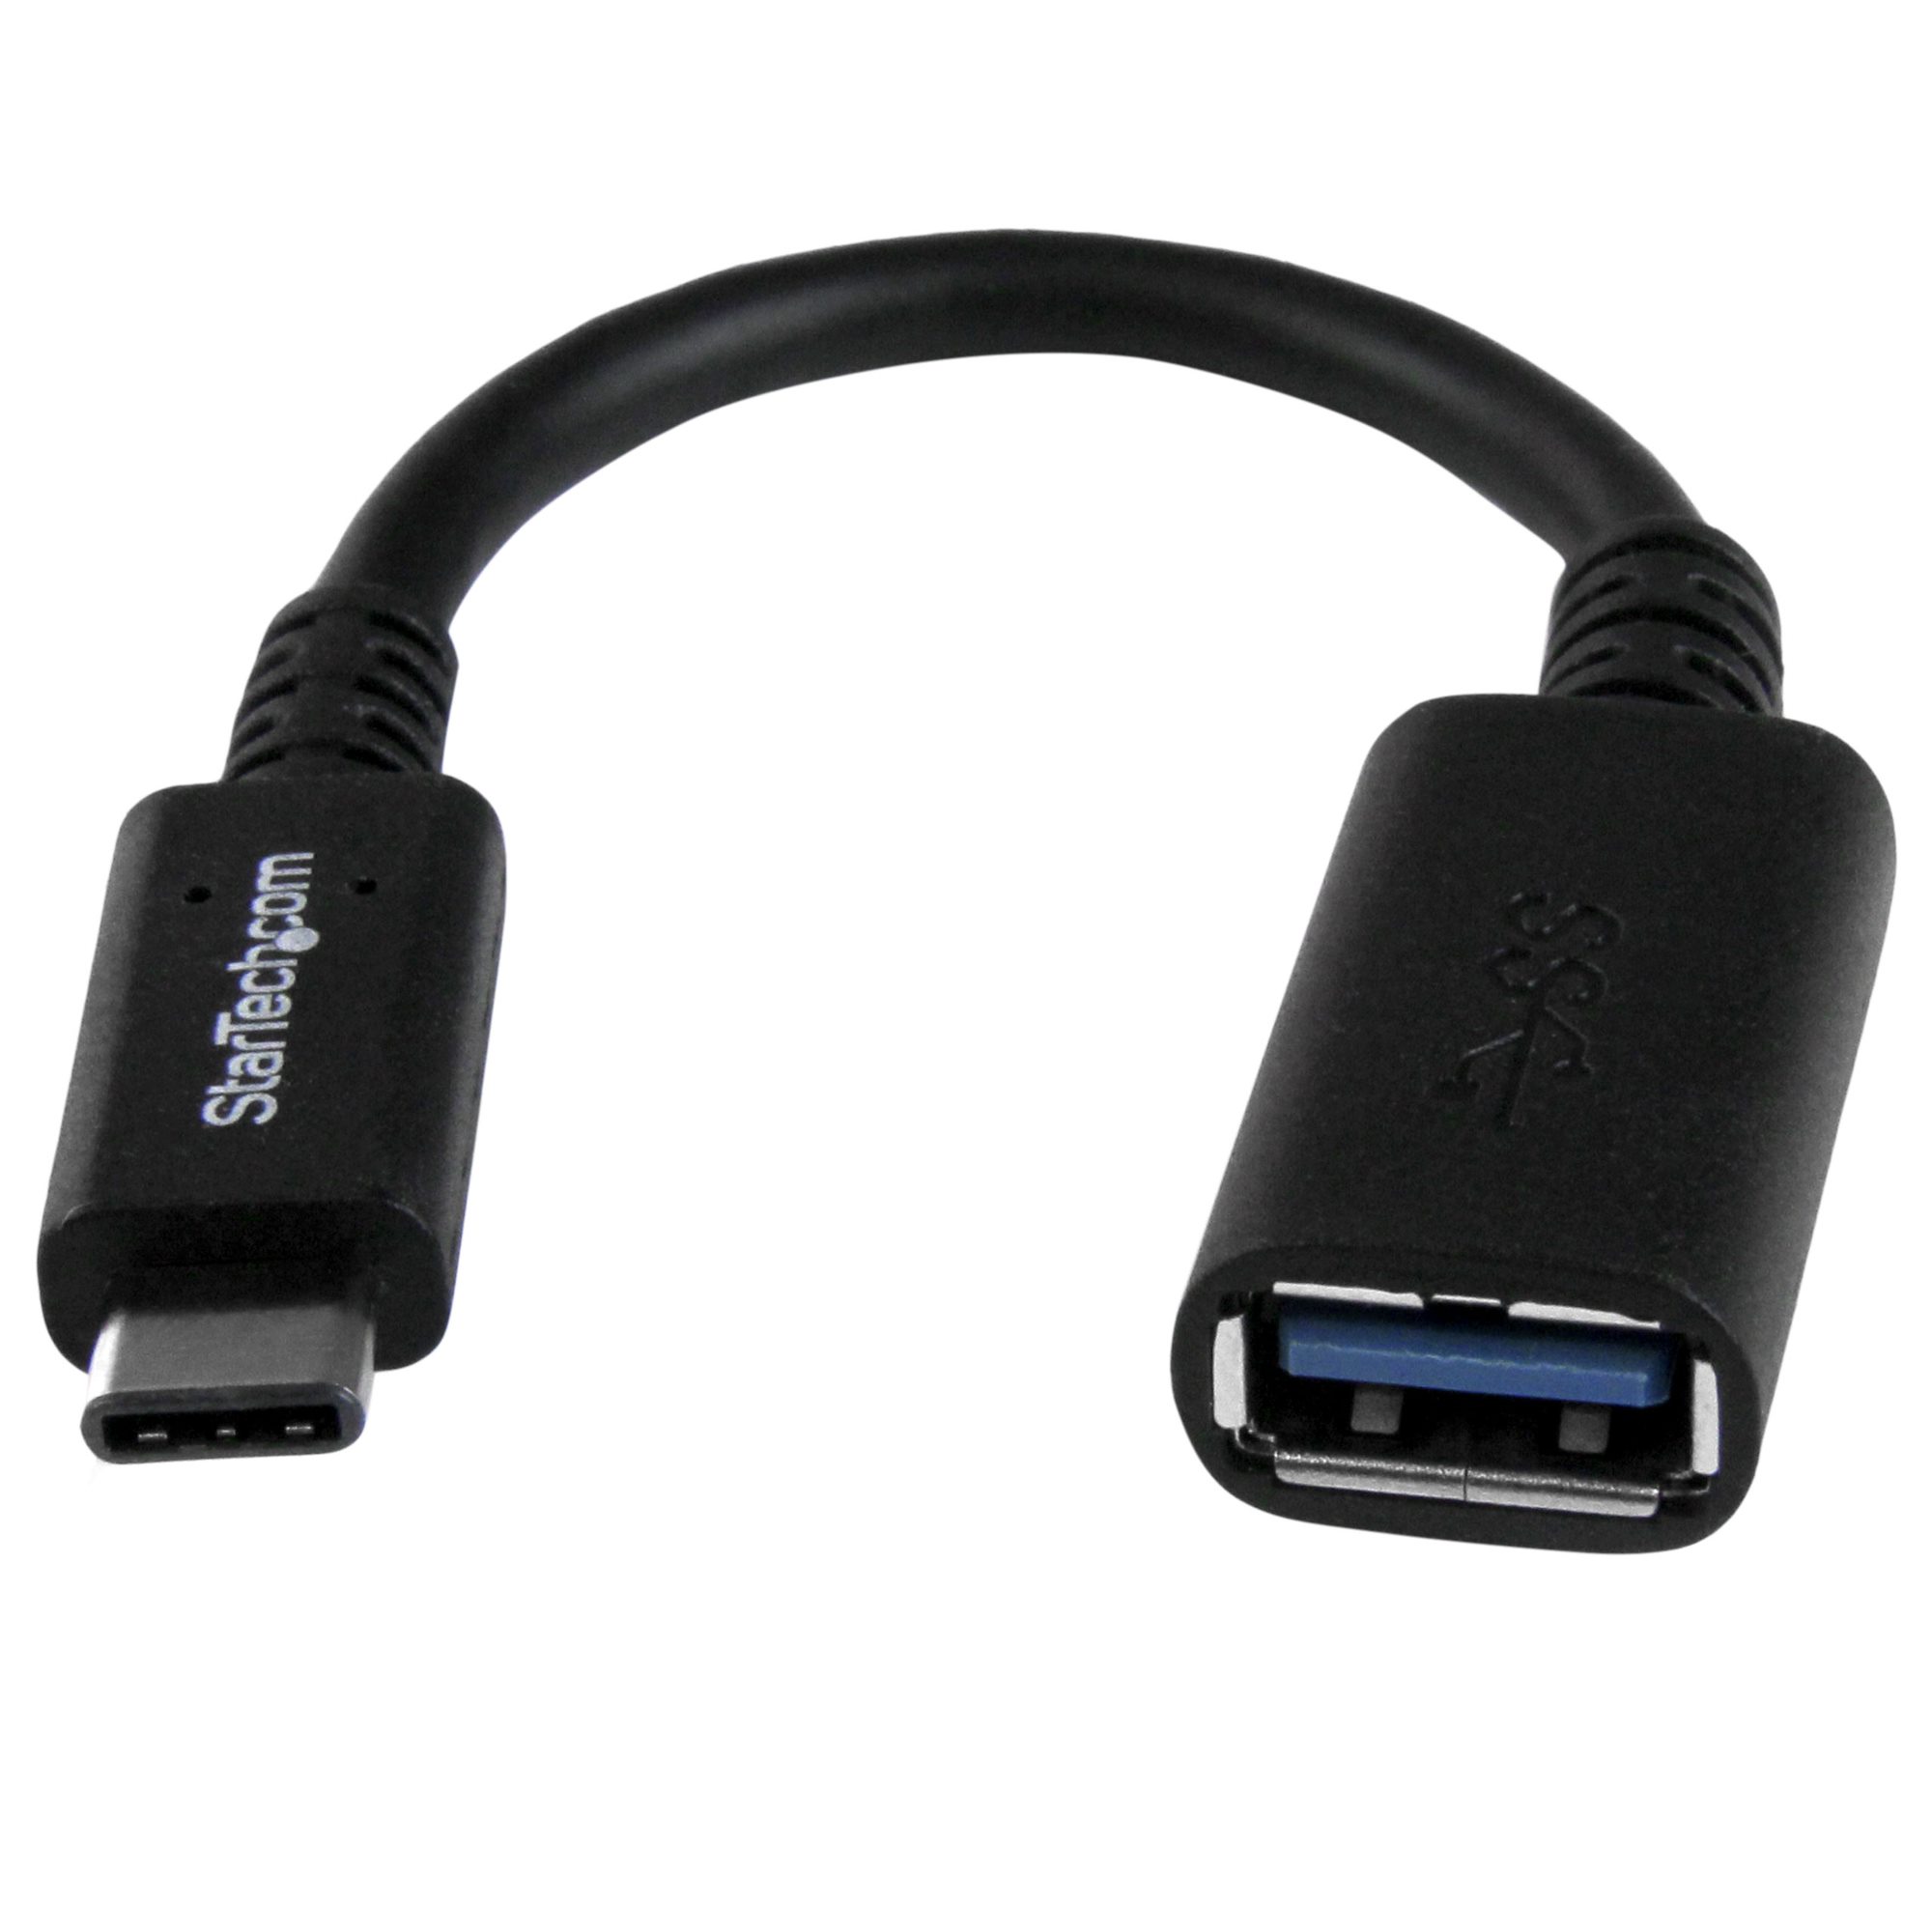 Skov kabel disharmoni USB-C to USB Adapter Converter USB-A - USB-C Cables | StarTech.com